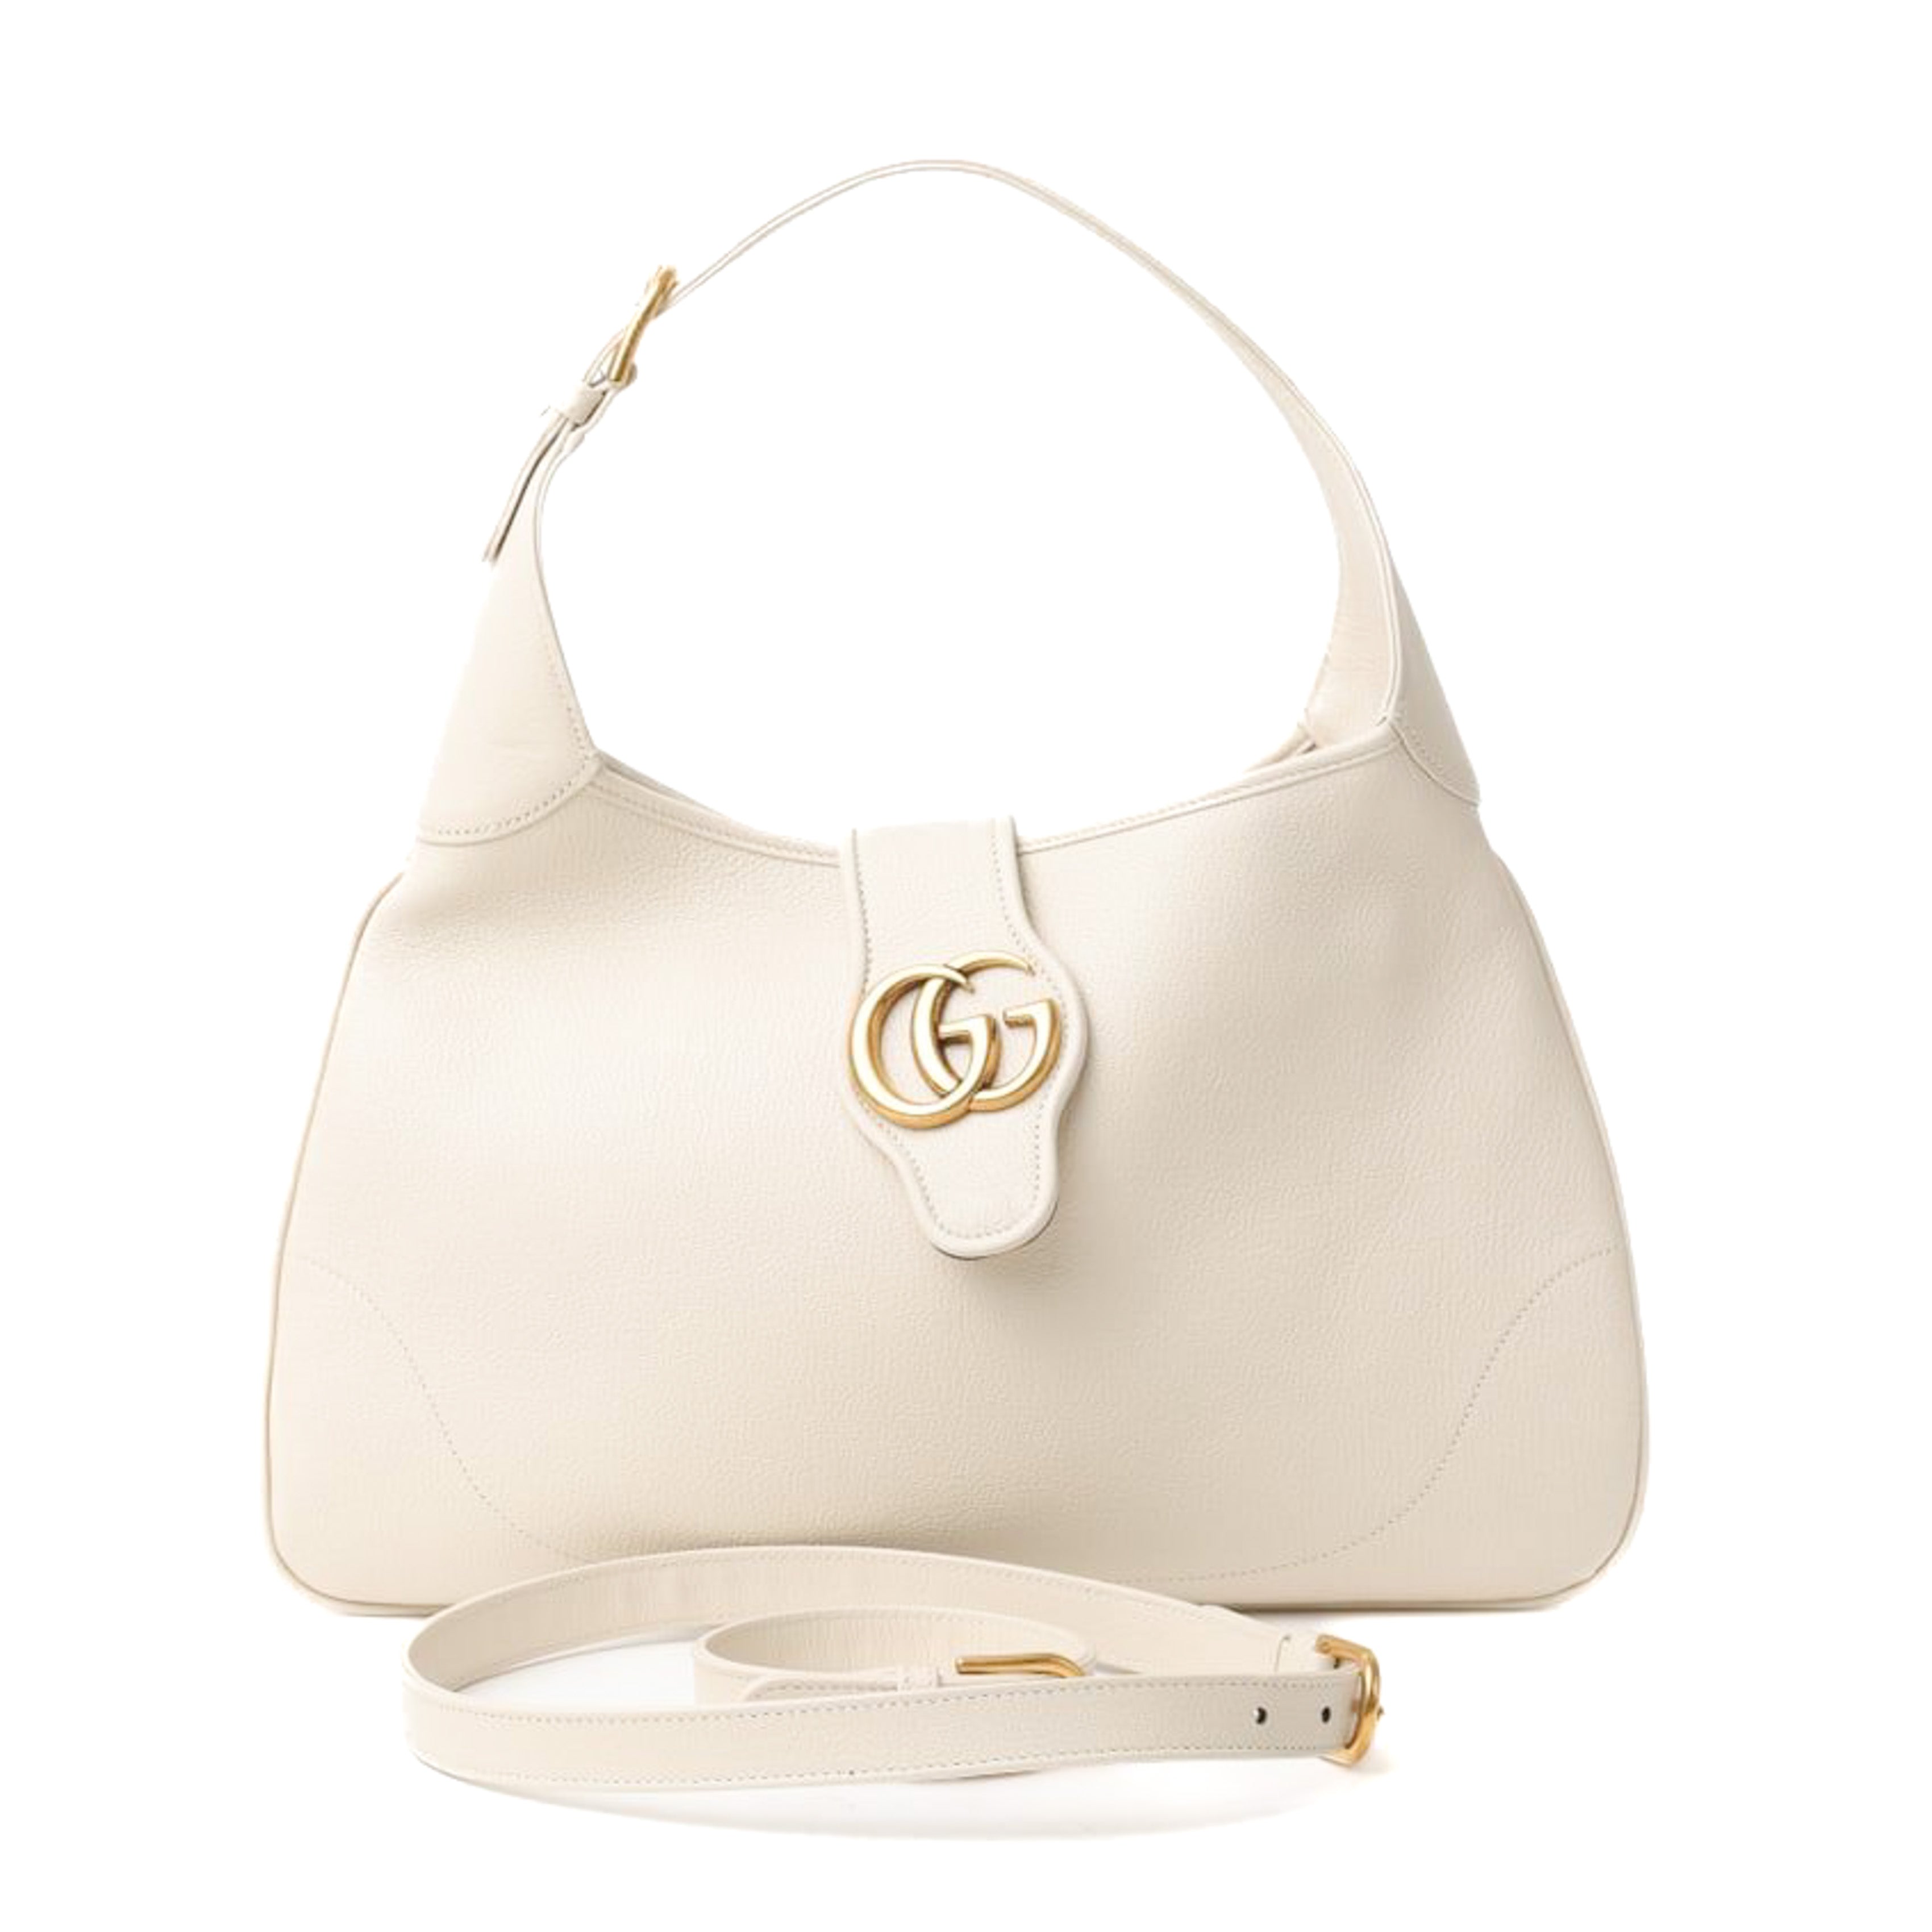 GUCCI Gucci Aphrodite Medium Shoulder Bag in White - Vault 55